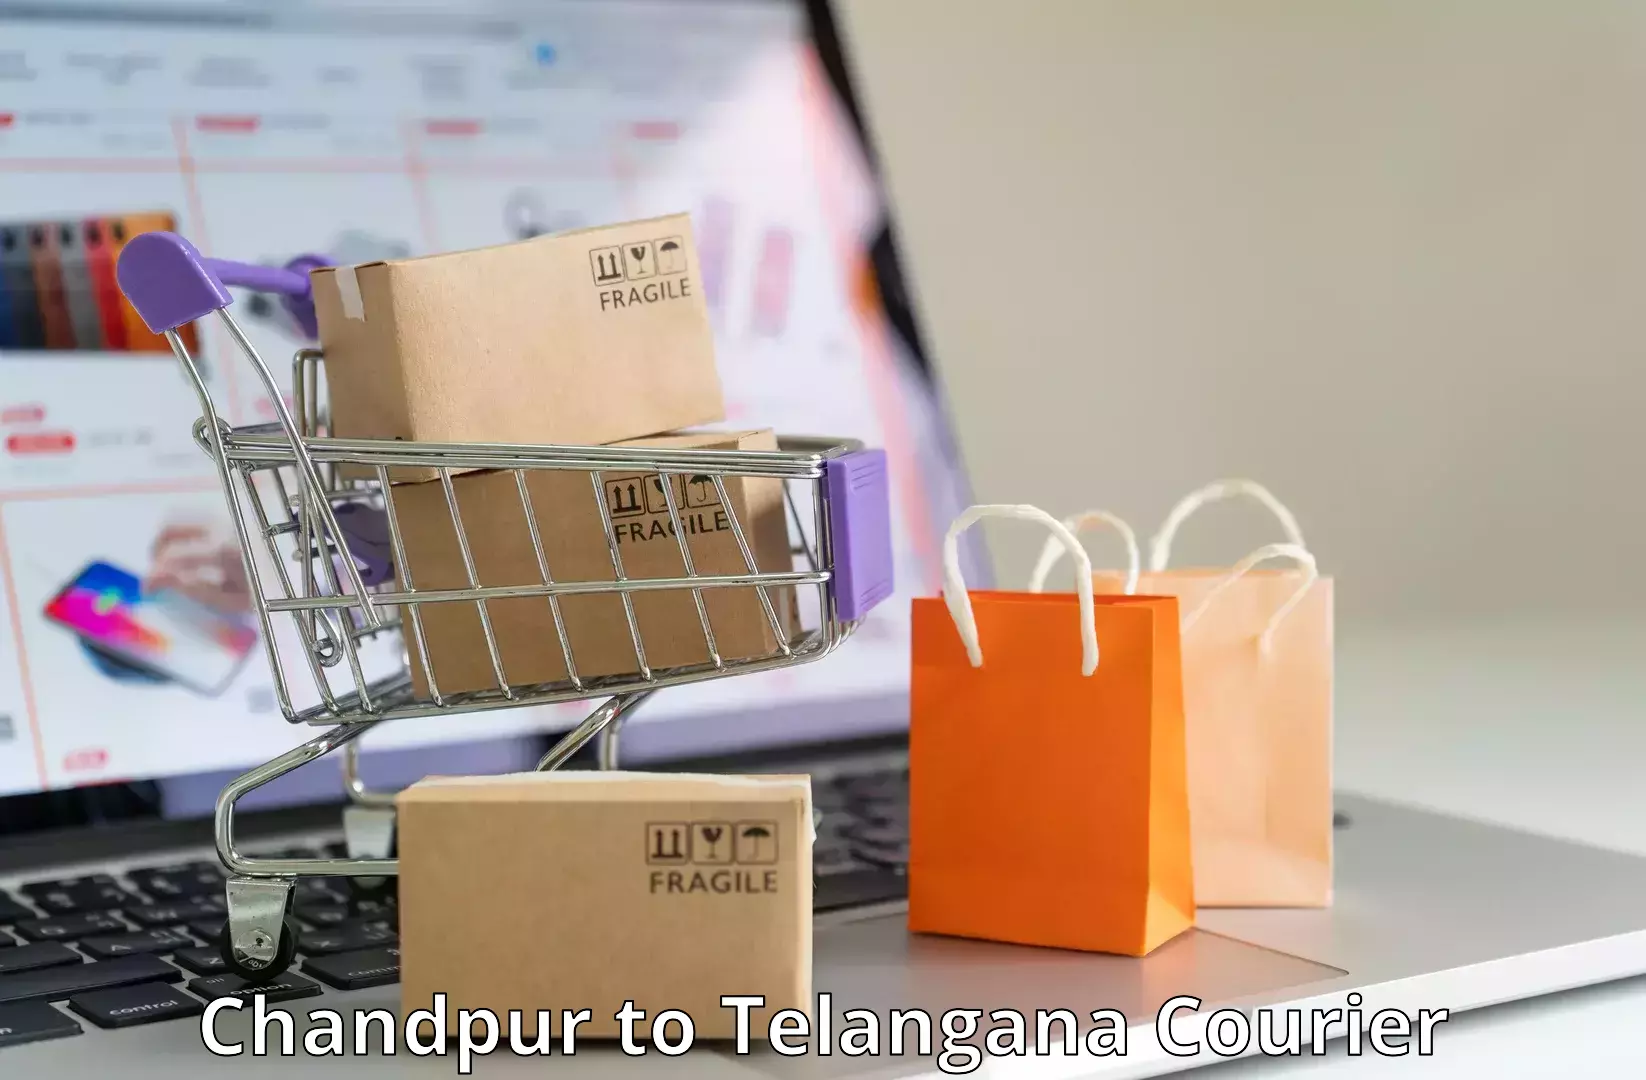 Courier service innovation Chandpur to Telangana